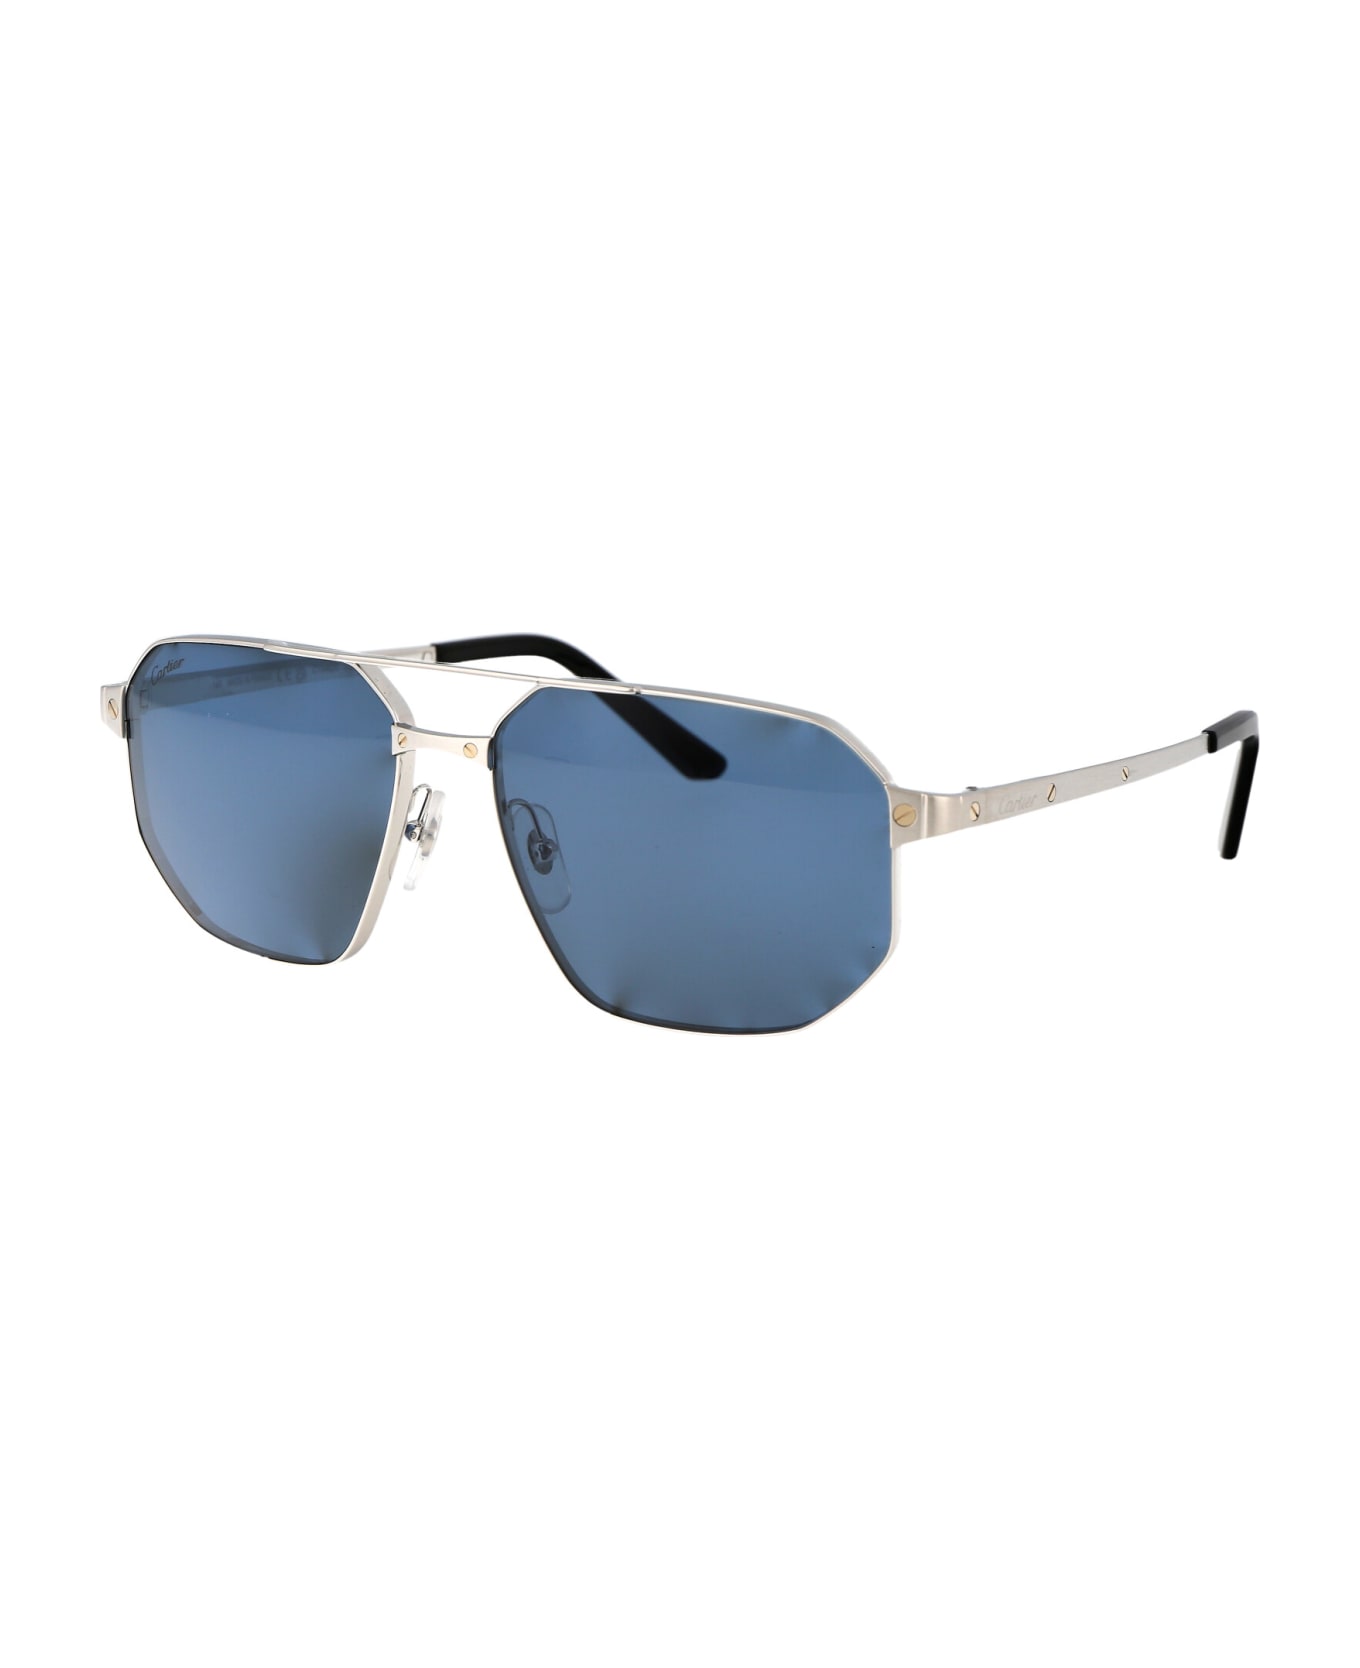 Cartier Eyewear Ct0462s Sunglasses - 002 SILVER SILVER BLUE